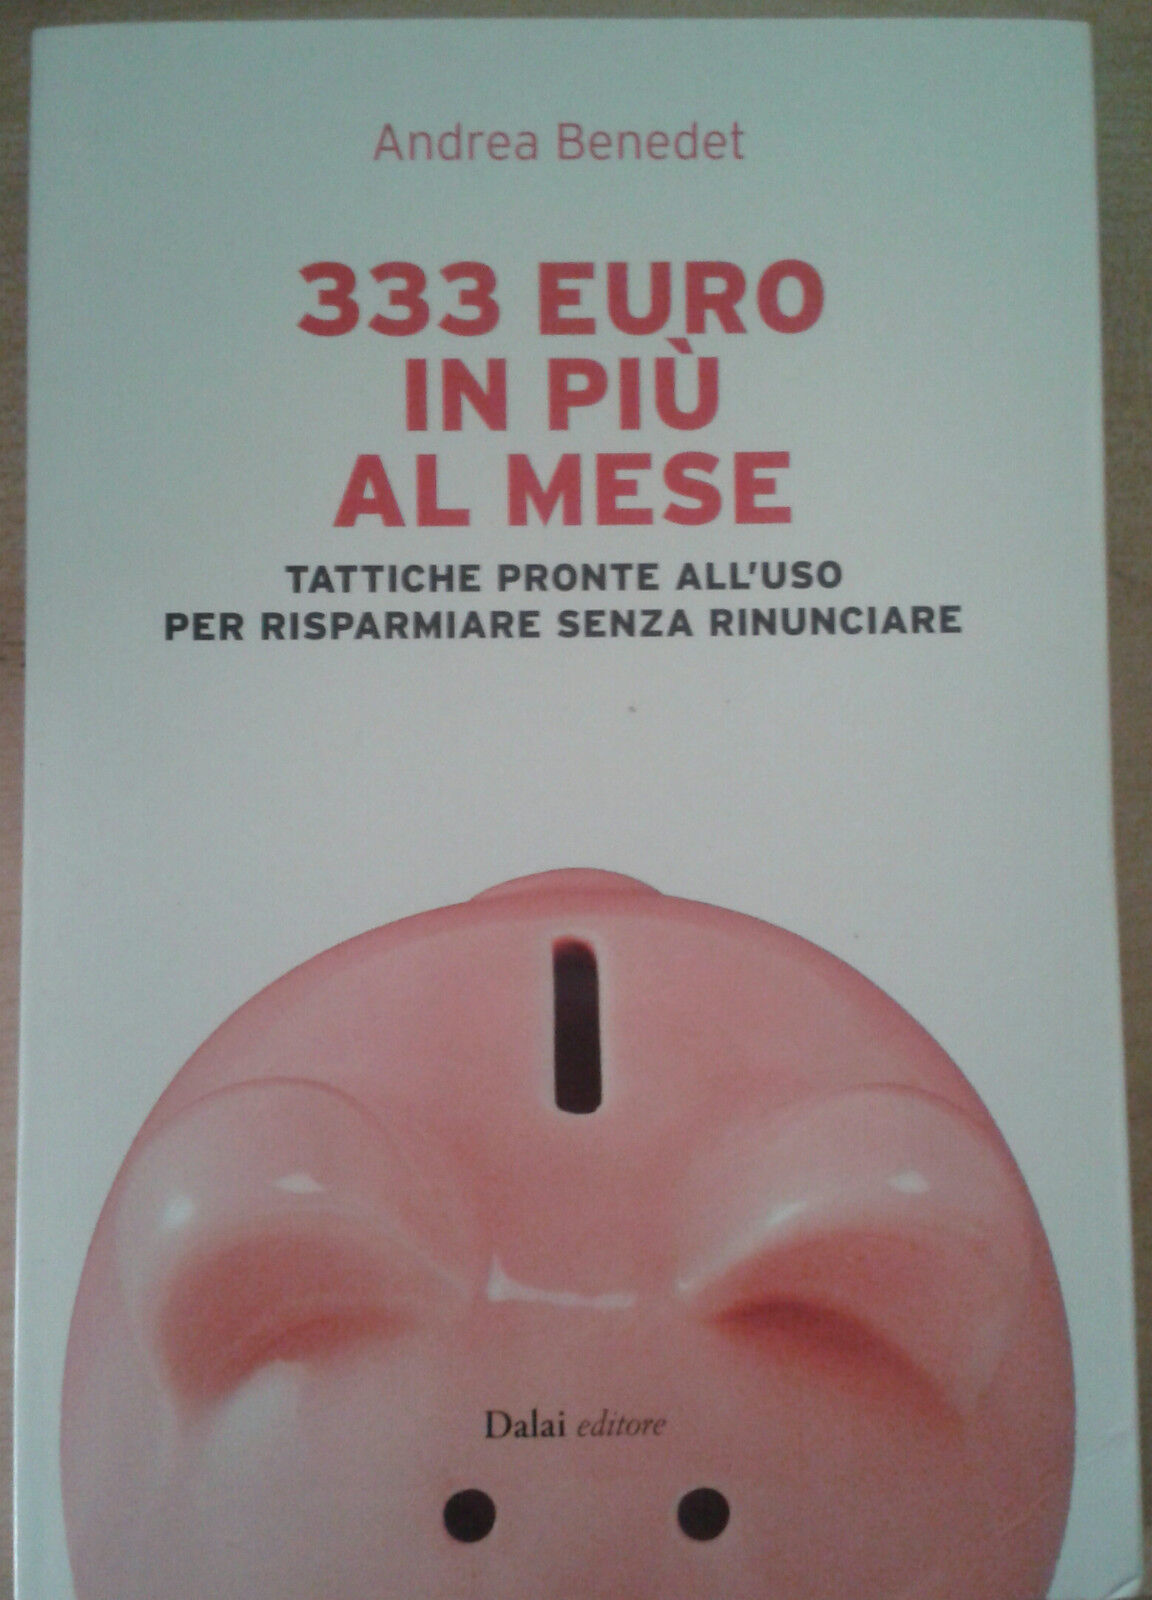 333 euro in pi? al mese - ANDREA BENEDET - DALAI - 2011 - M